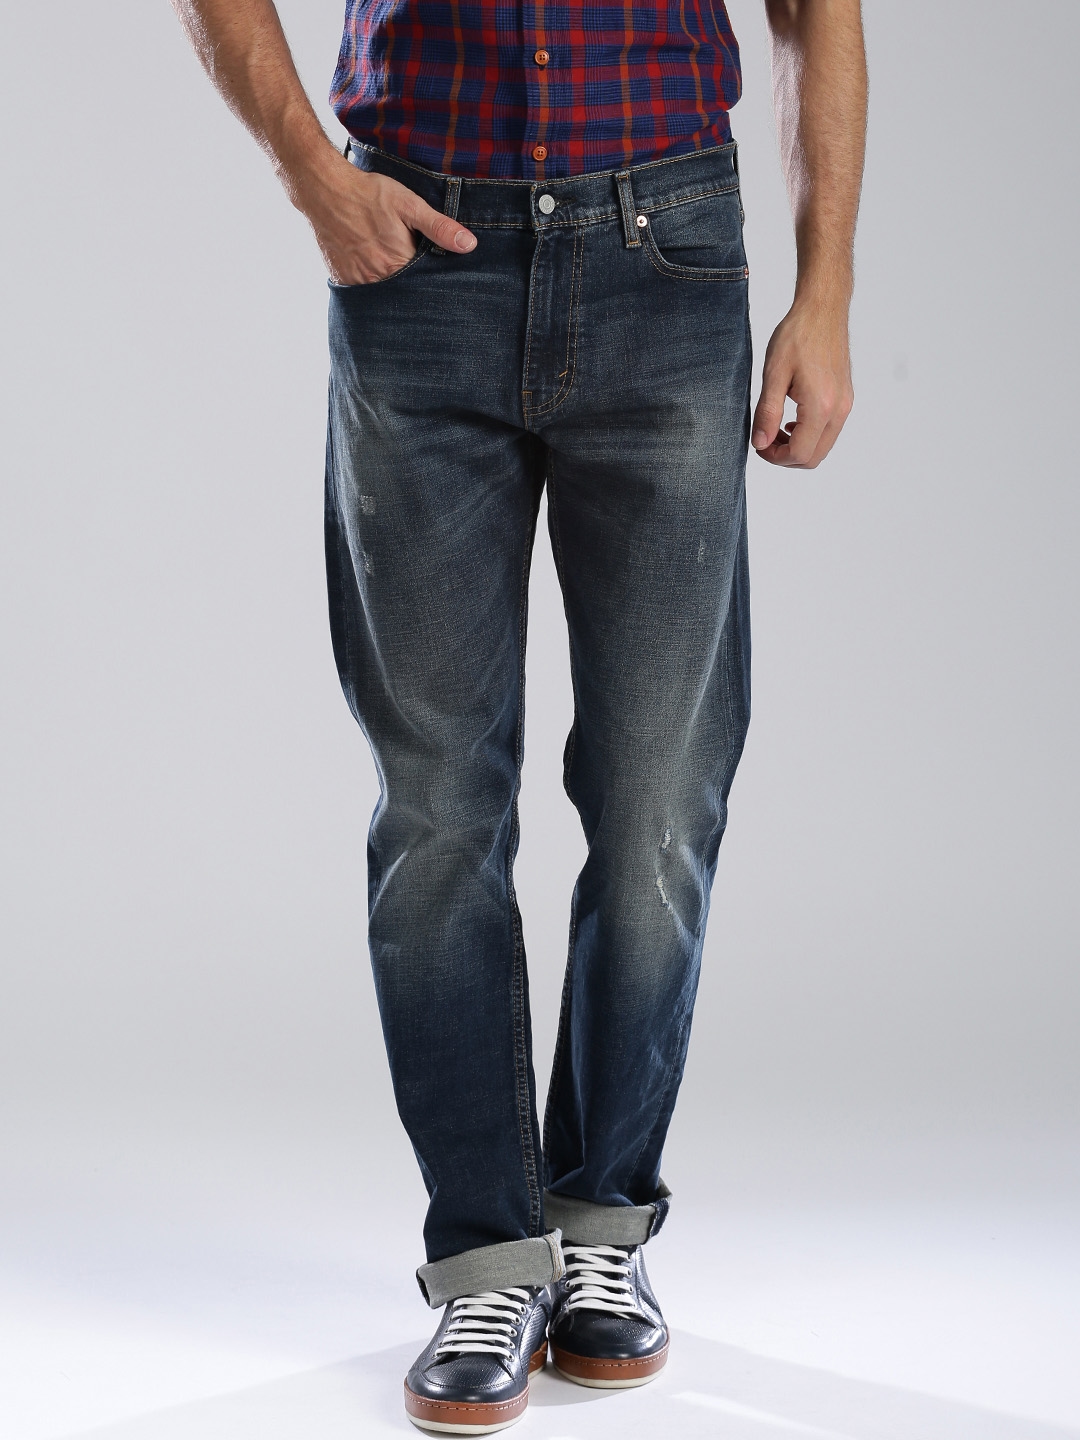 levi's 513 slim fit jeans